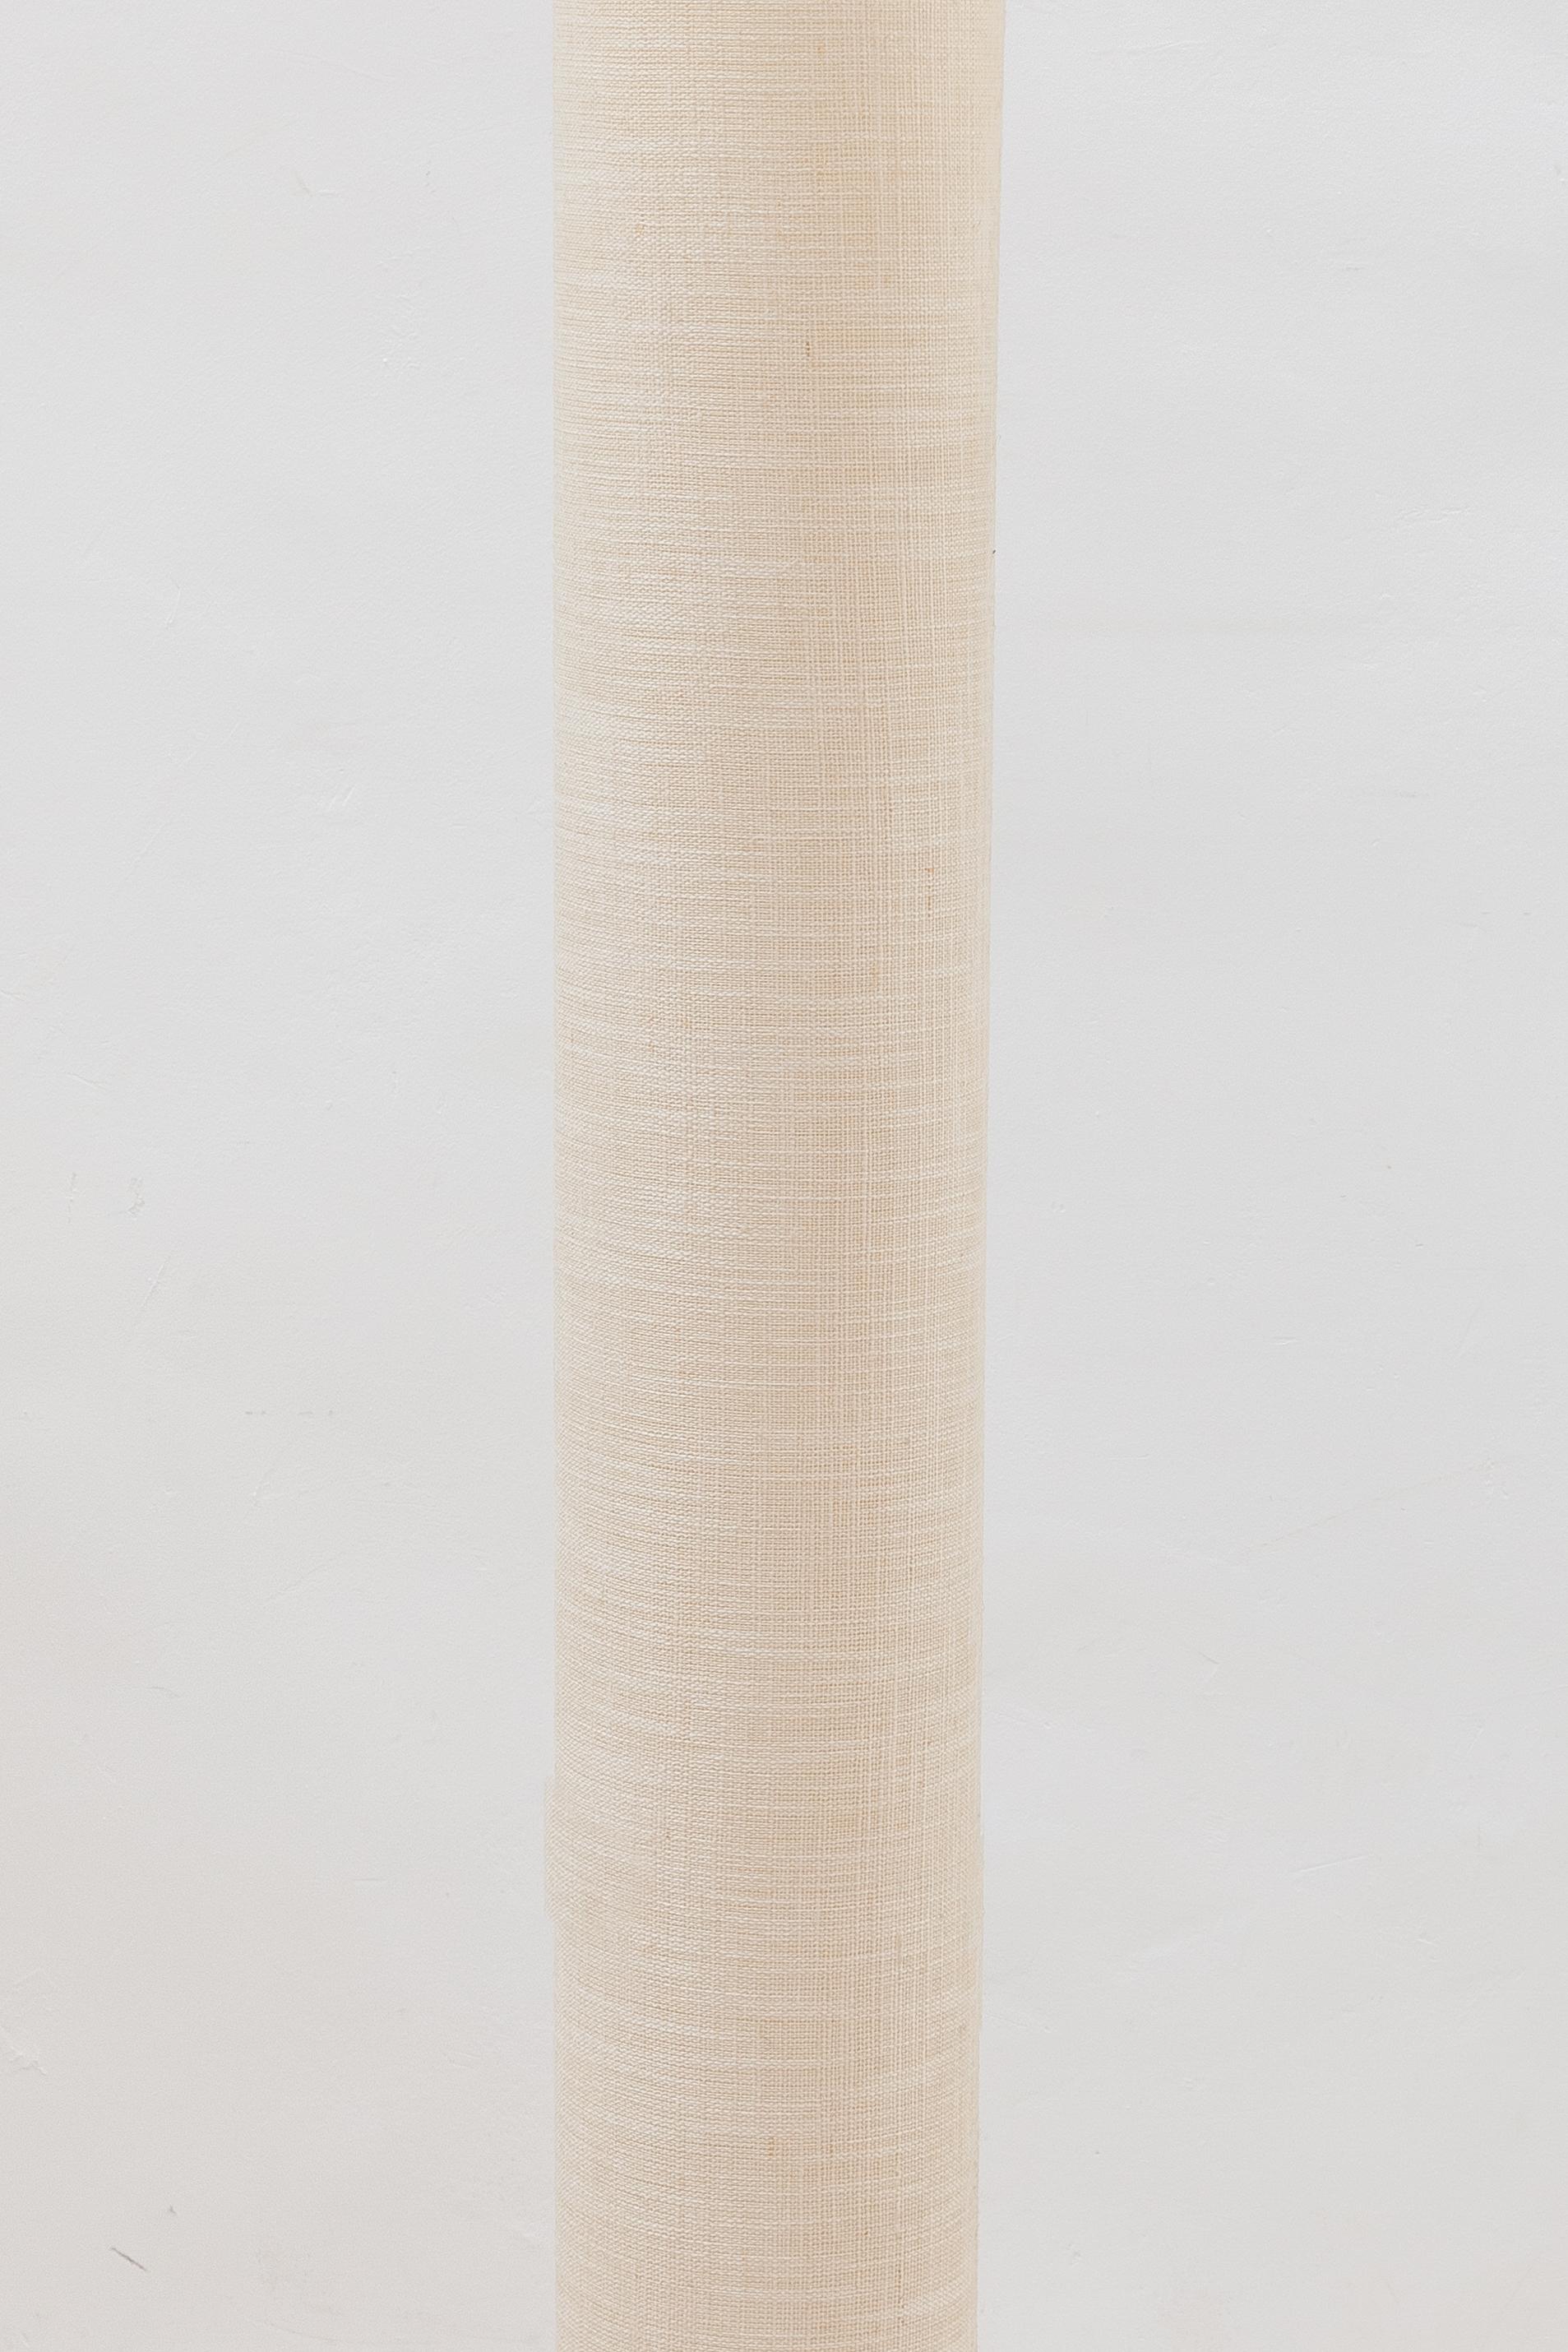 German Mid-Century Modern Linen Shade Floor Lamp, 1960s